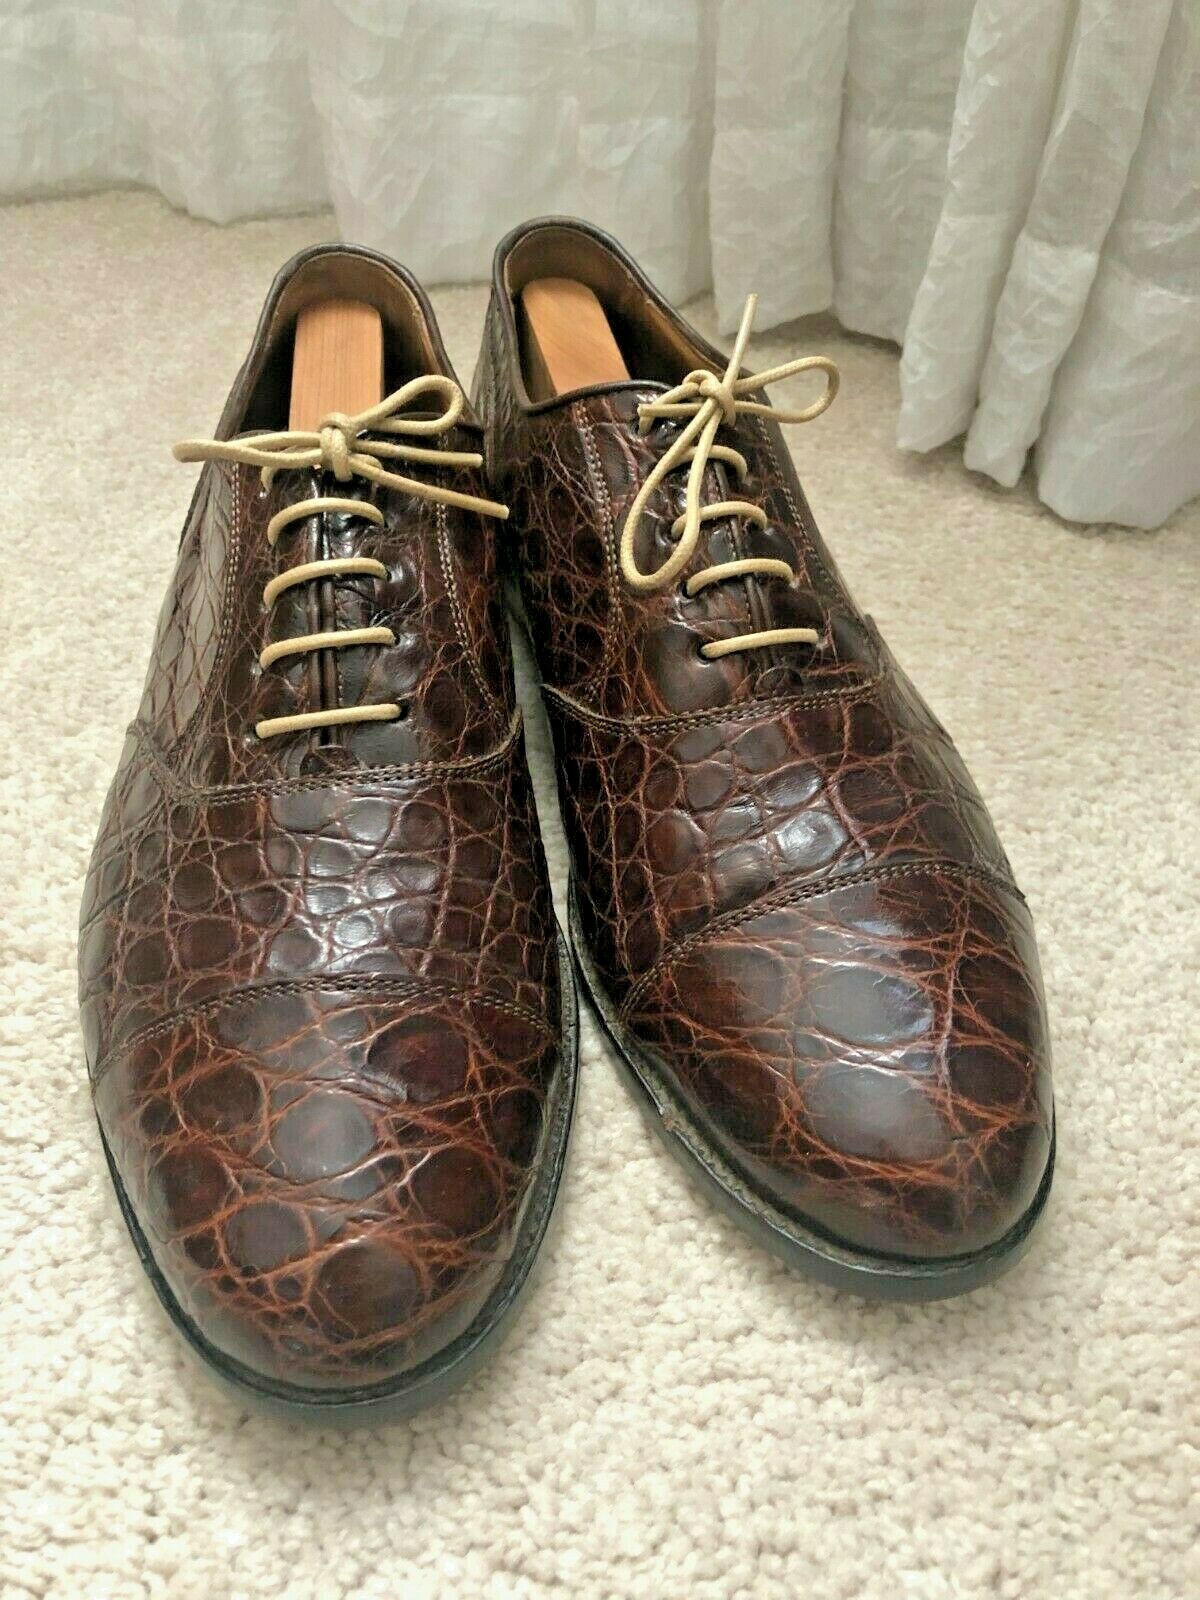 Zelli Alligator Shoes - Size 11.5 M